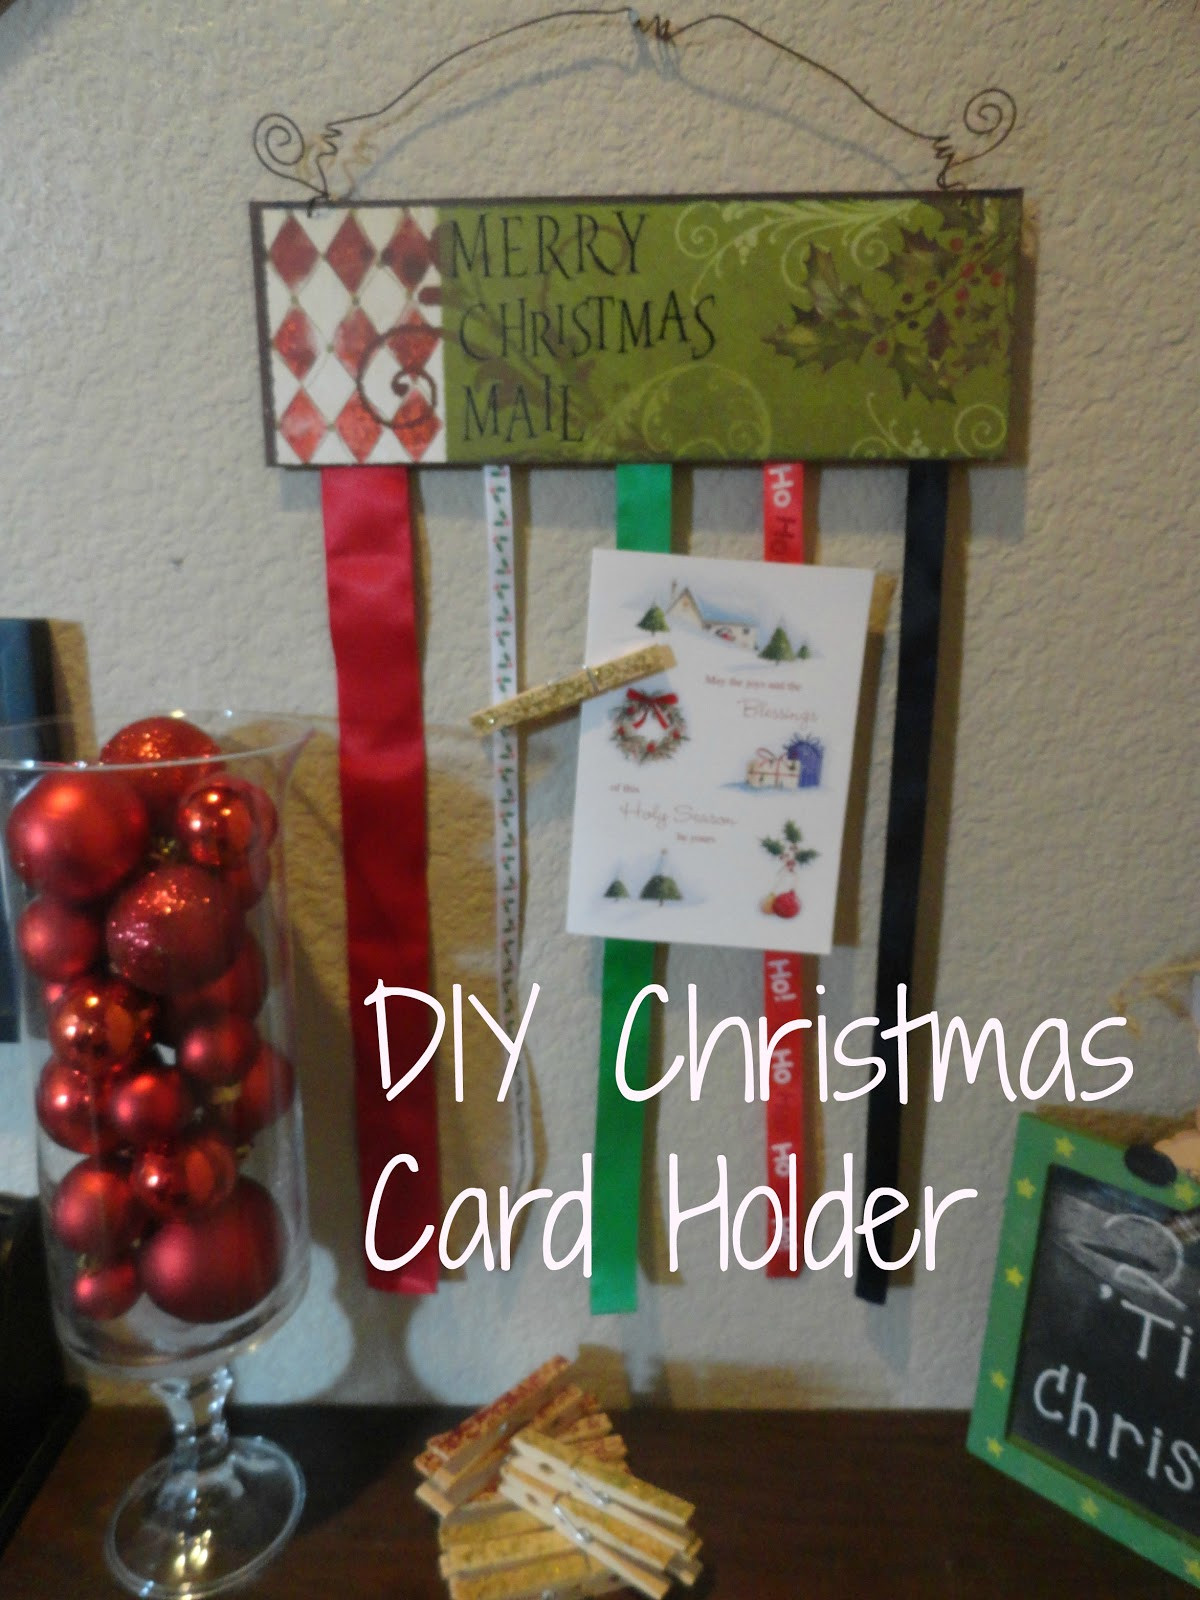 DIY Christmas Card Holders
 So I Saw This Tutorial DIY Christmas Card Holder